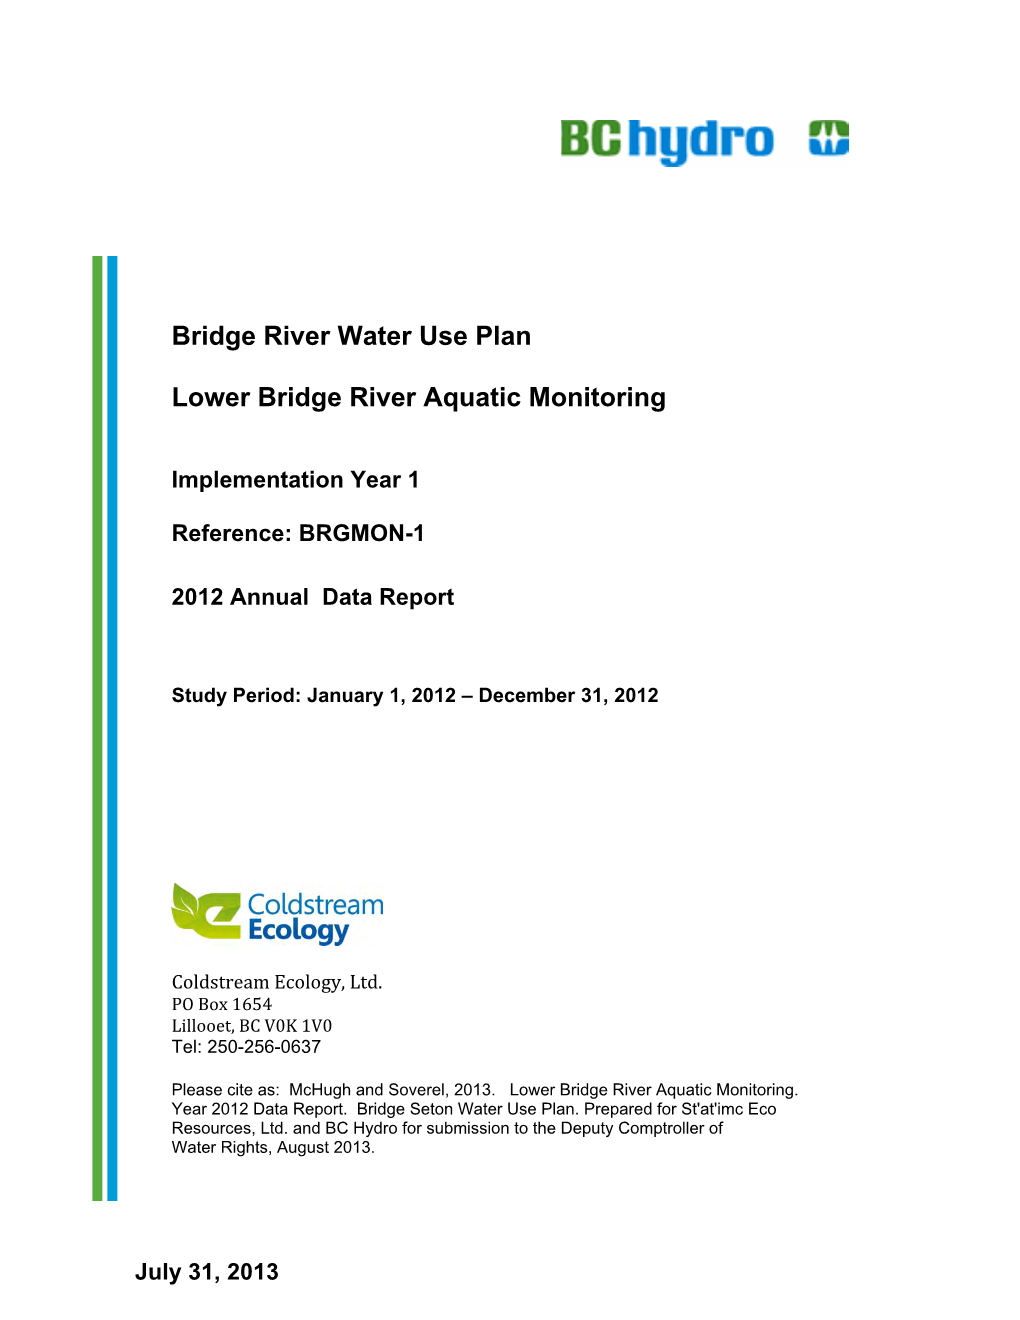 Lower Bridge River Aquatic Monitoring